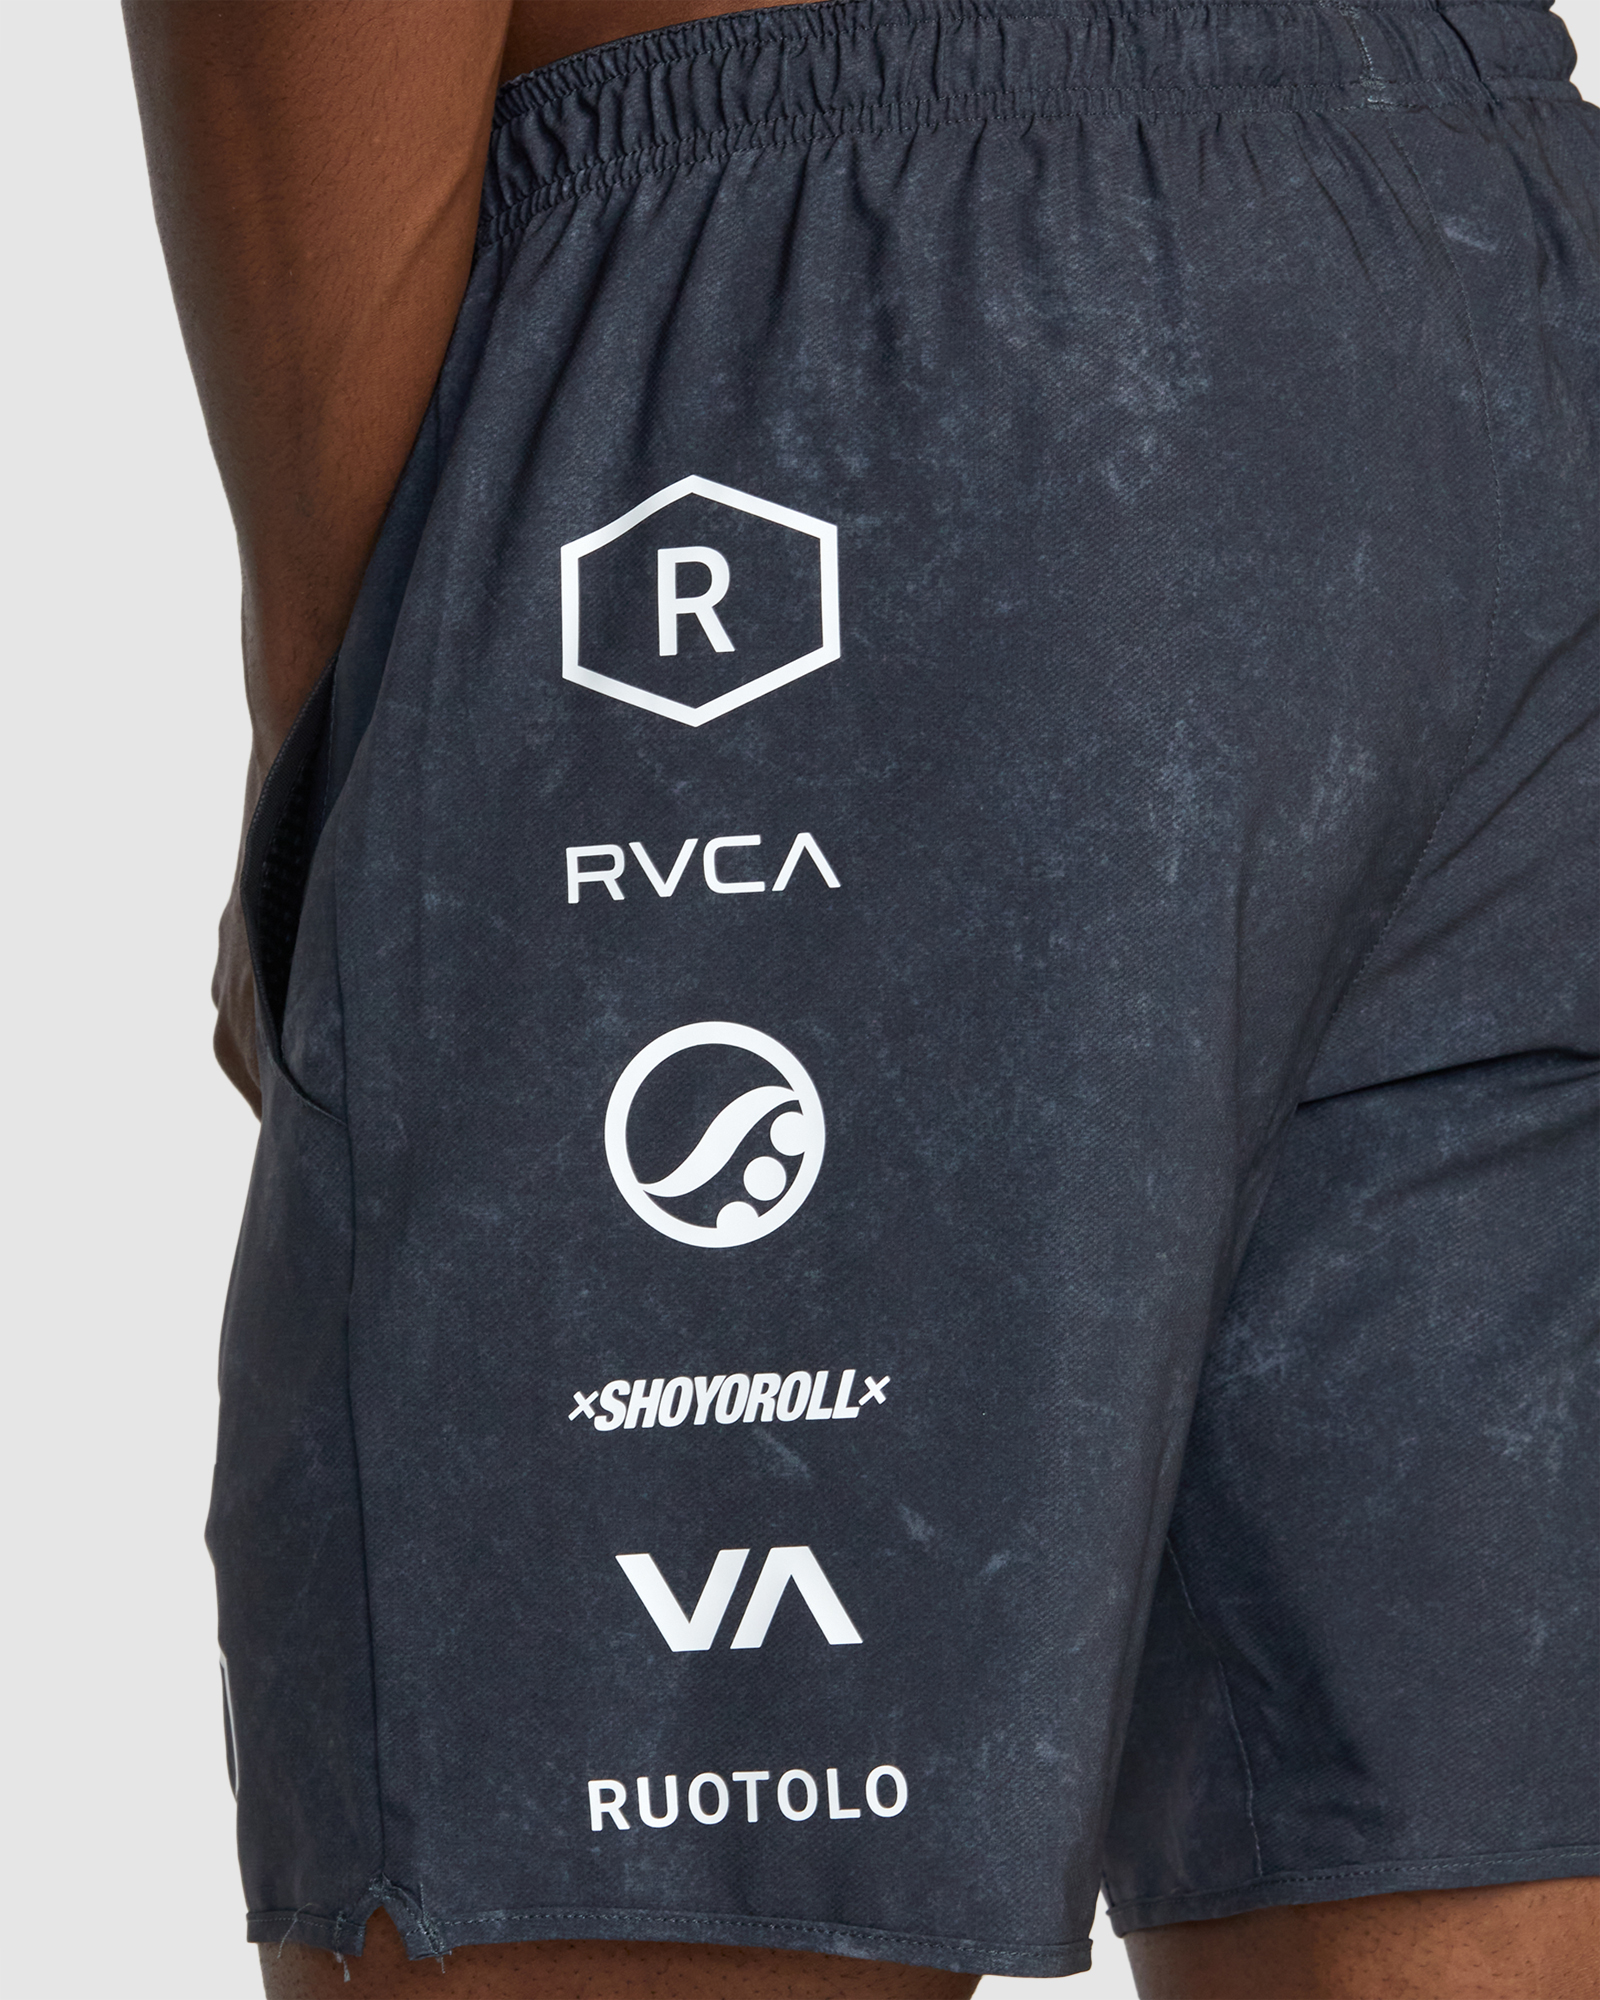 Rvca Ruotolo Yogger Stretch 17 Inch Technical Training Shorts For Men ...